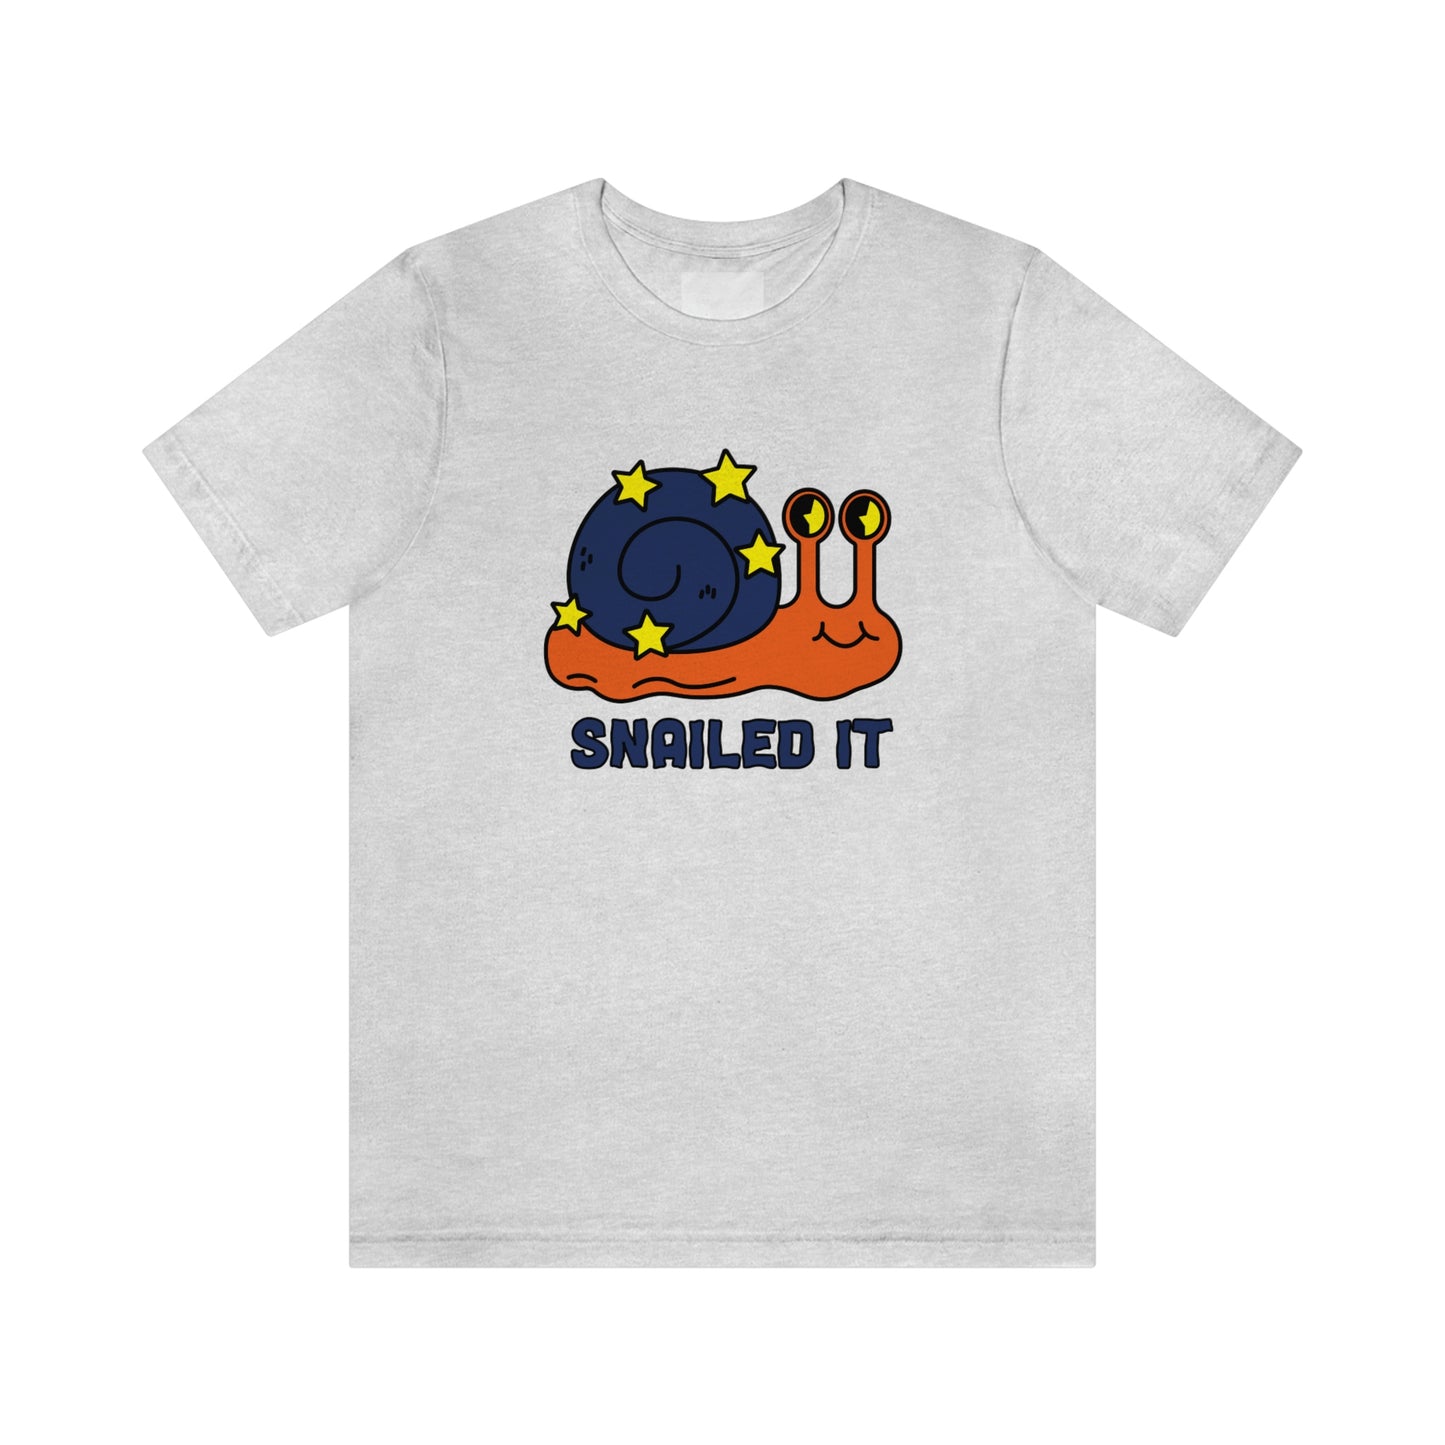 Snailed it - Men's Jersey Short Sleeve Tee - Men funny tees - T shirt